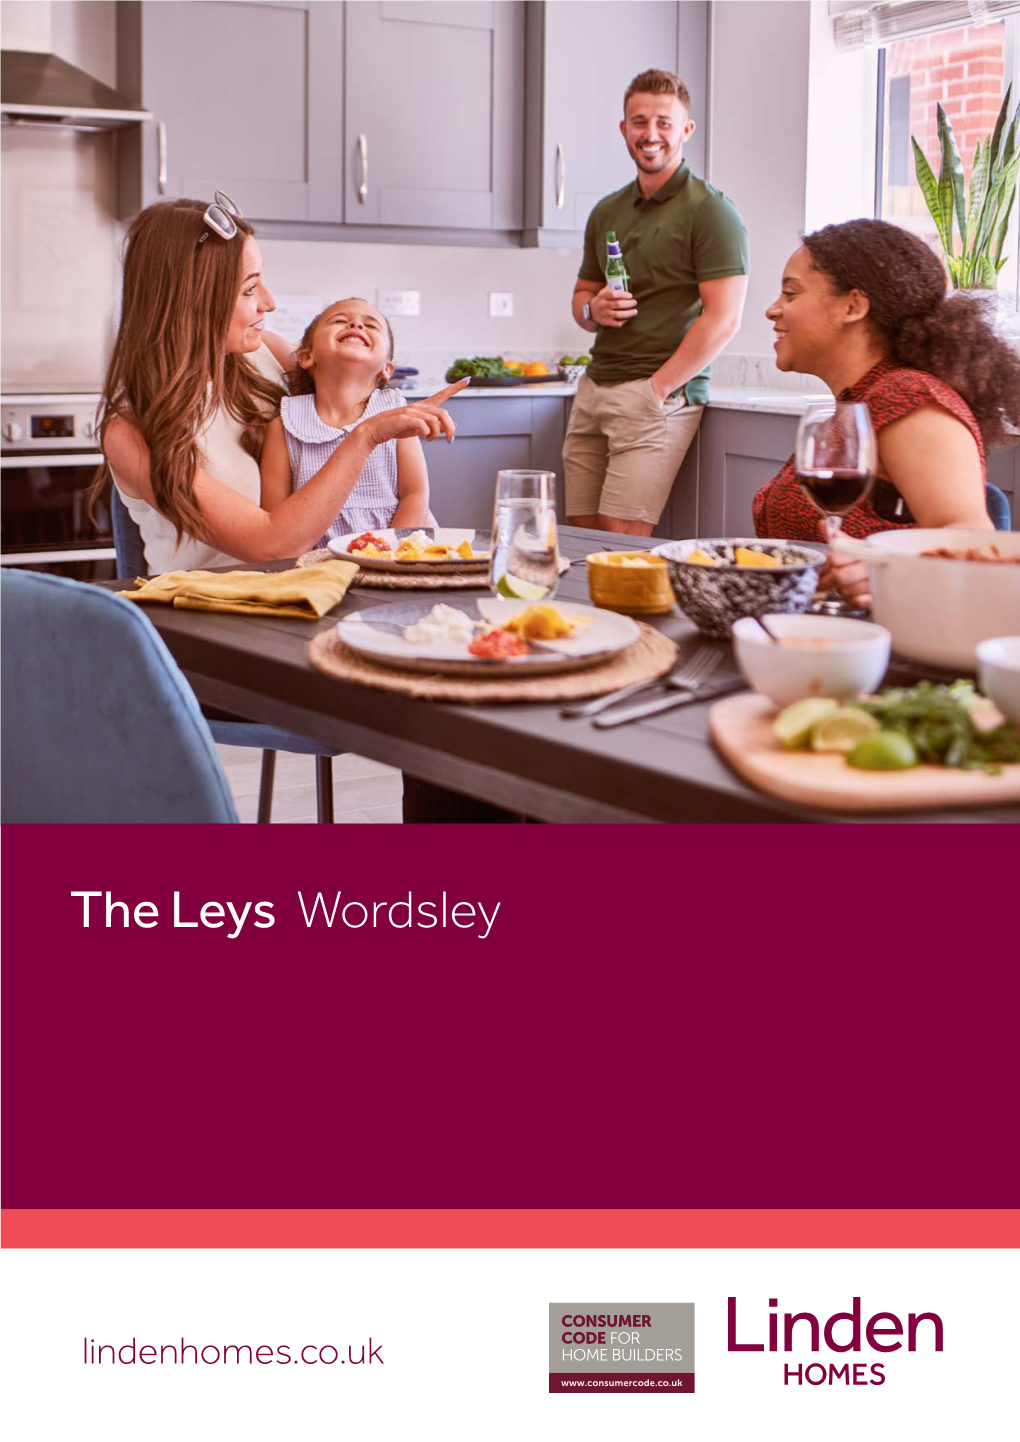 The Leys Wordsley